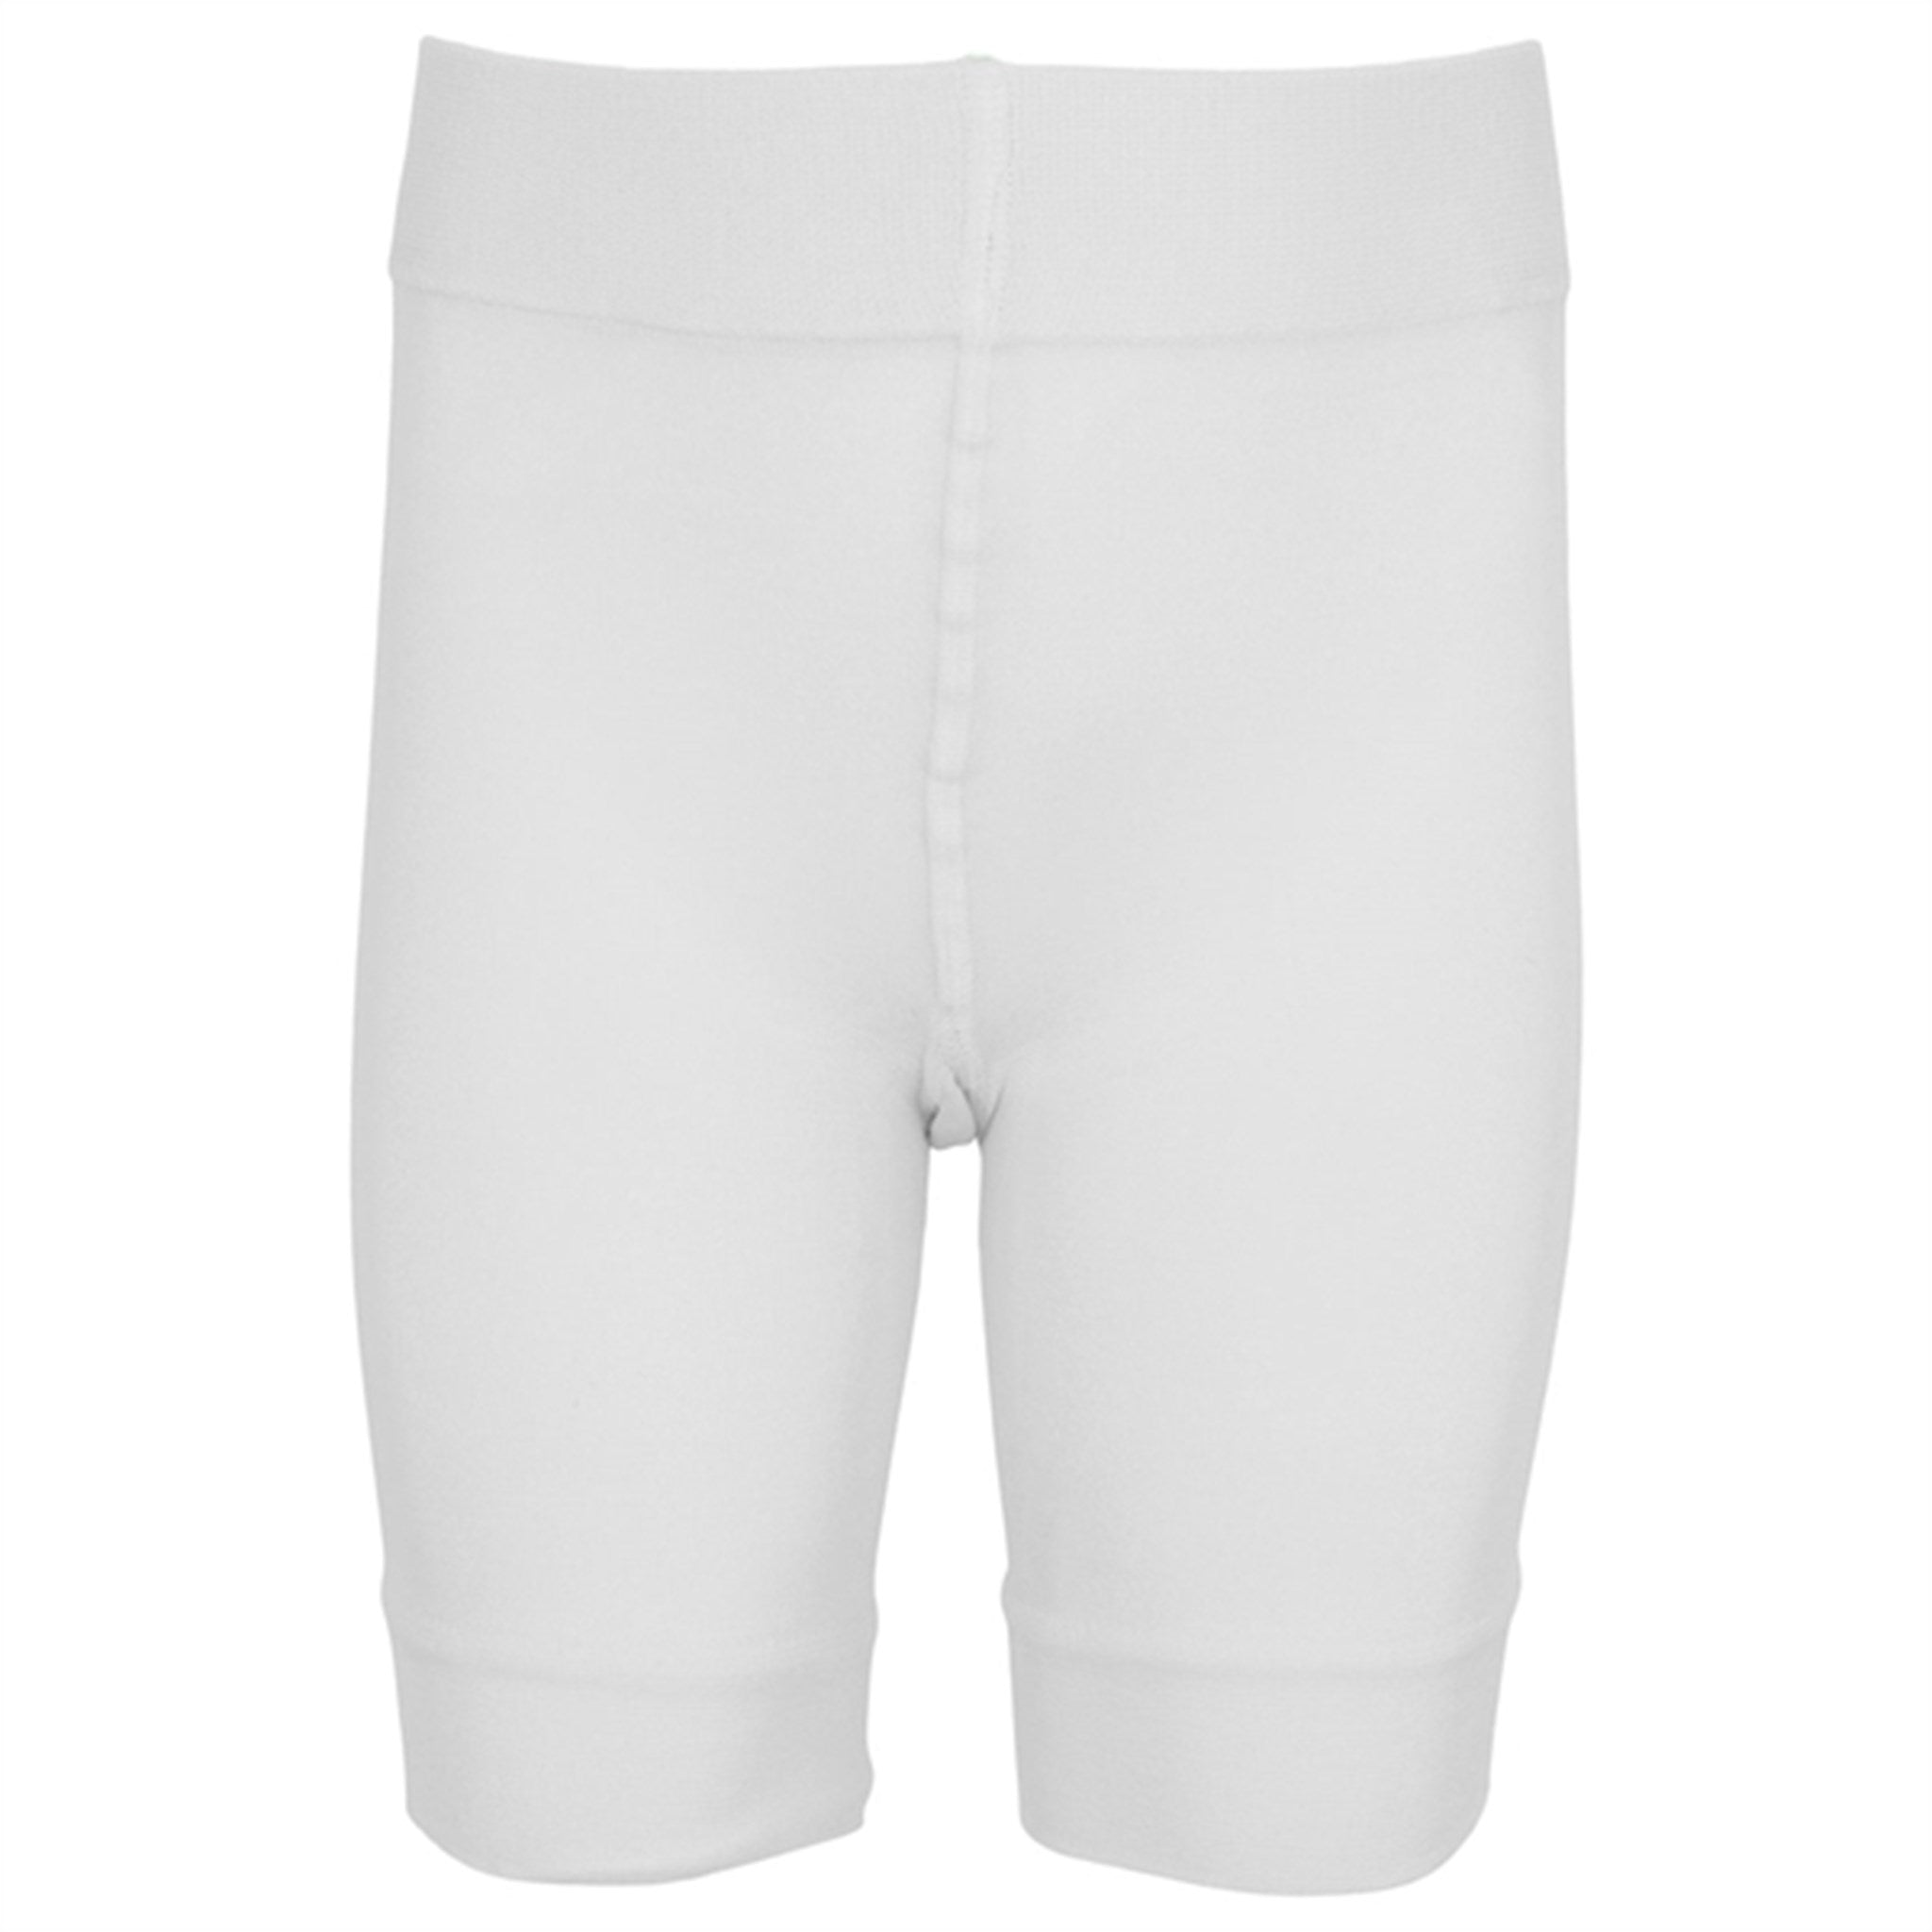 MP 301 Microfiber Shorts 1 White